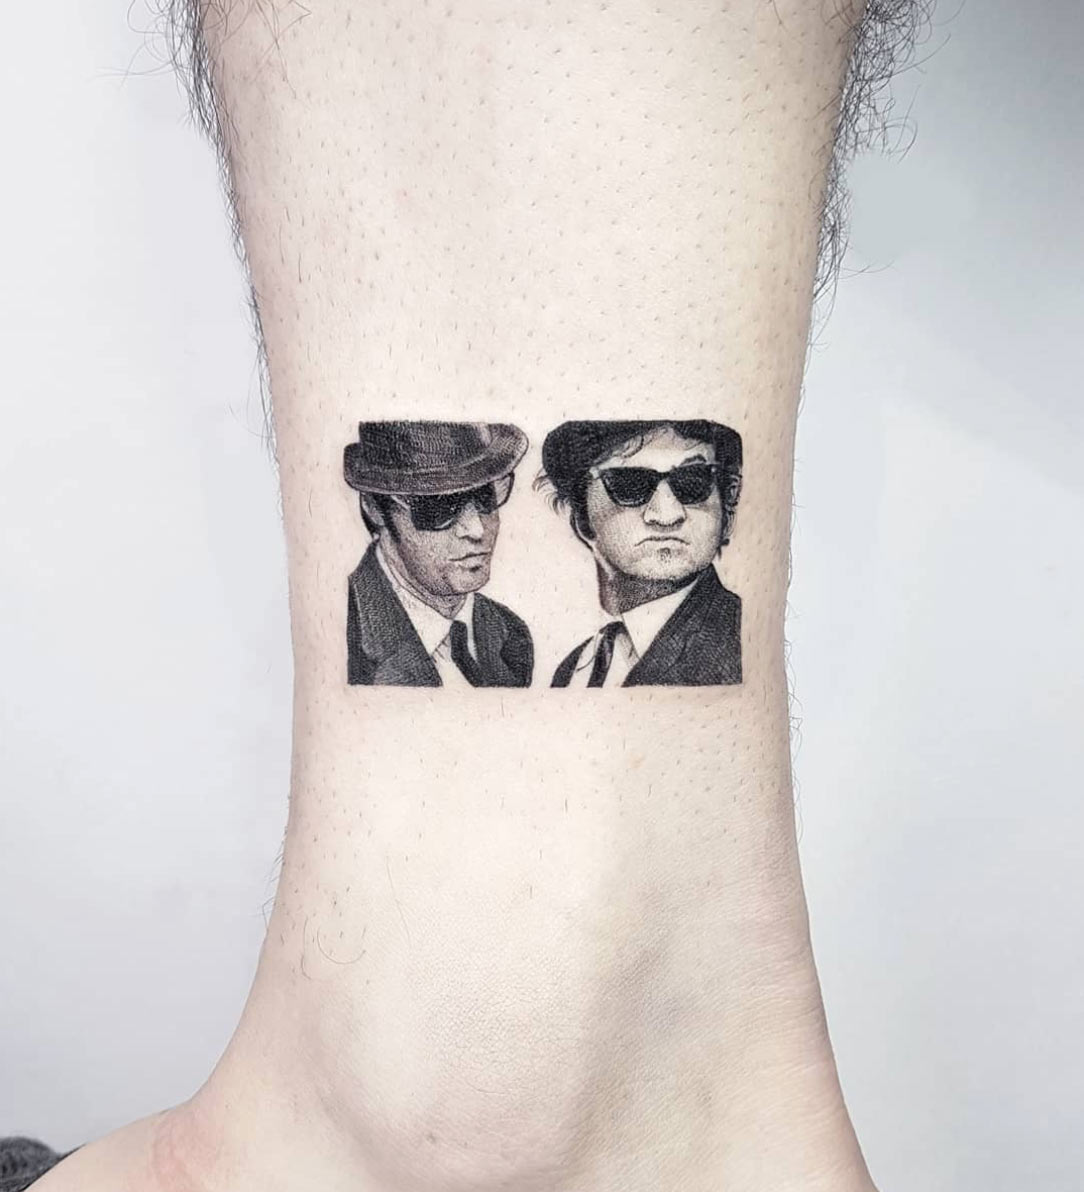 Blues Brothers tattoo by Kozo